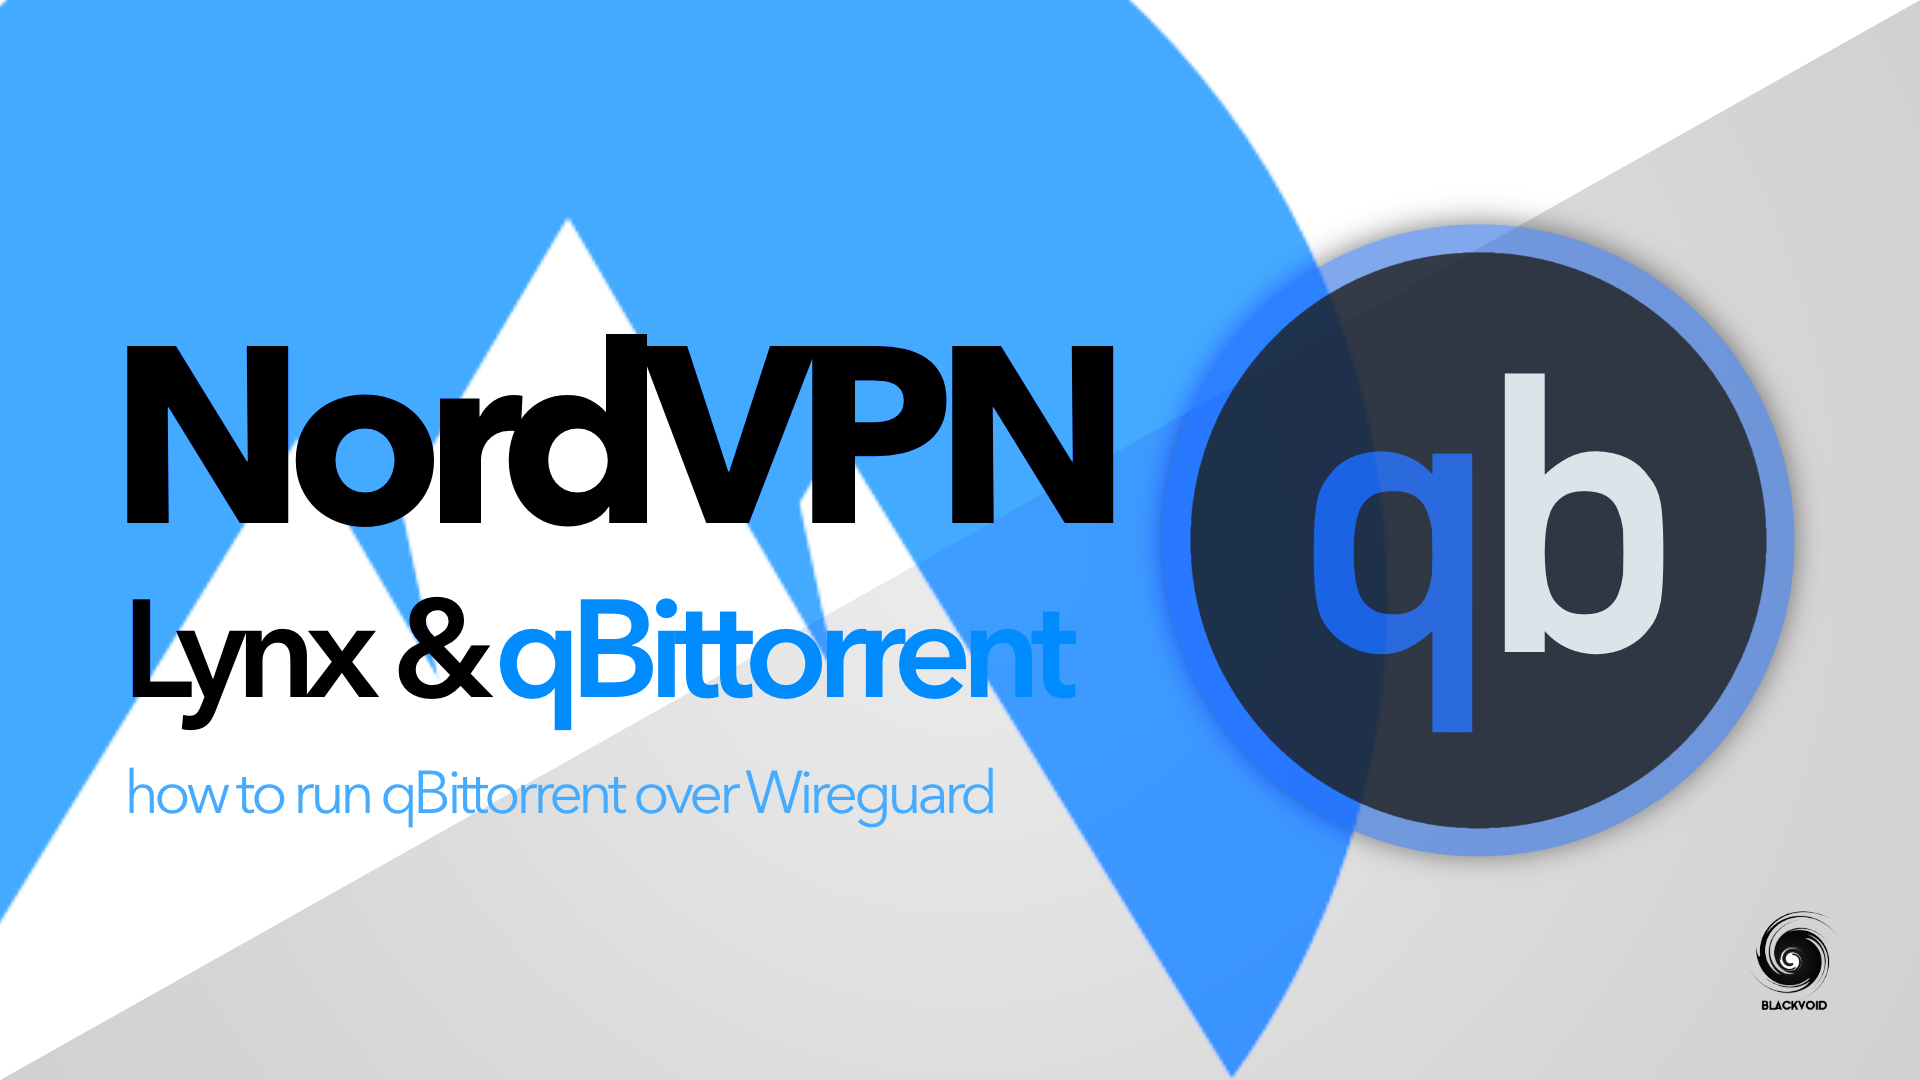 Running your torrent client via NordVPN Lynx (Wireguard)